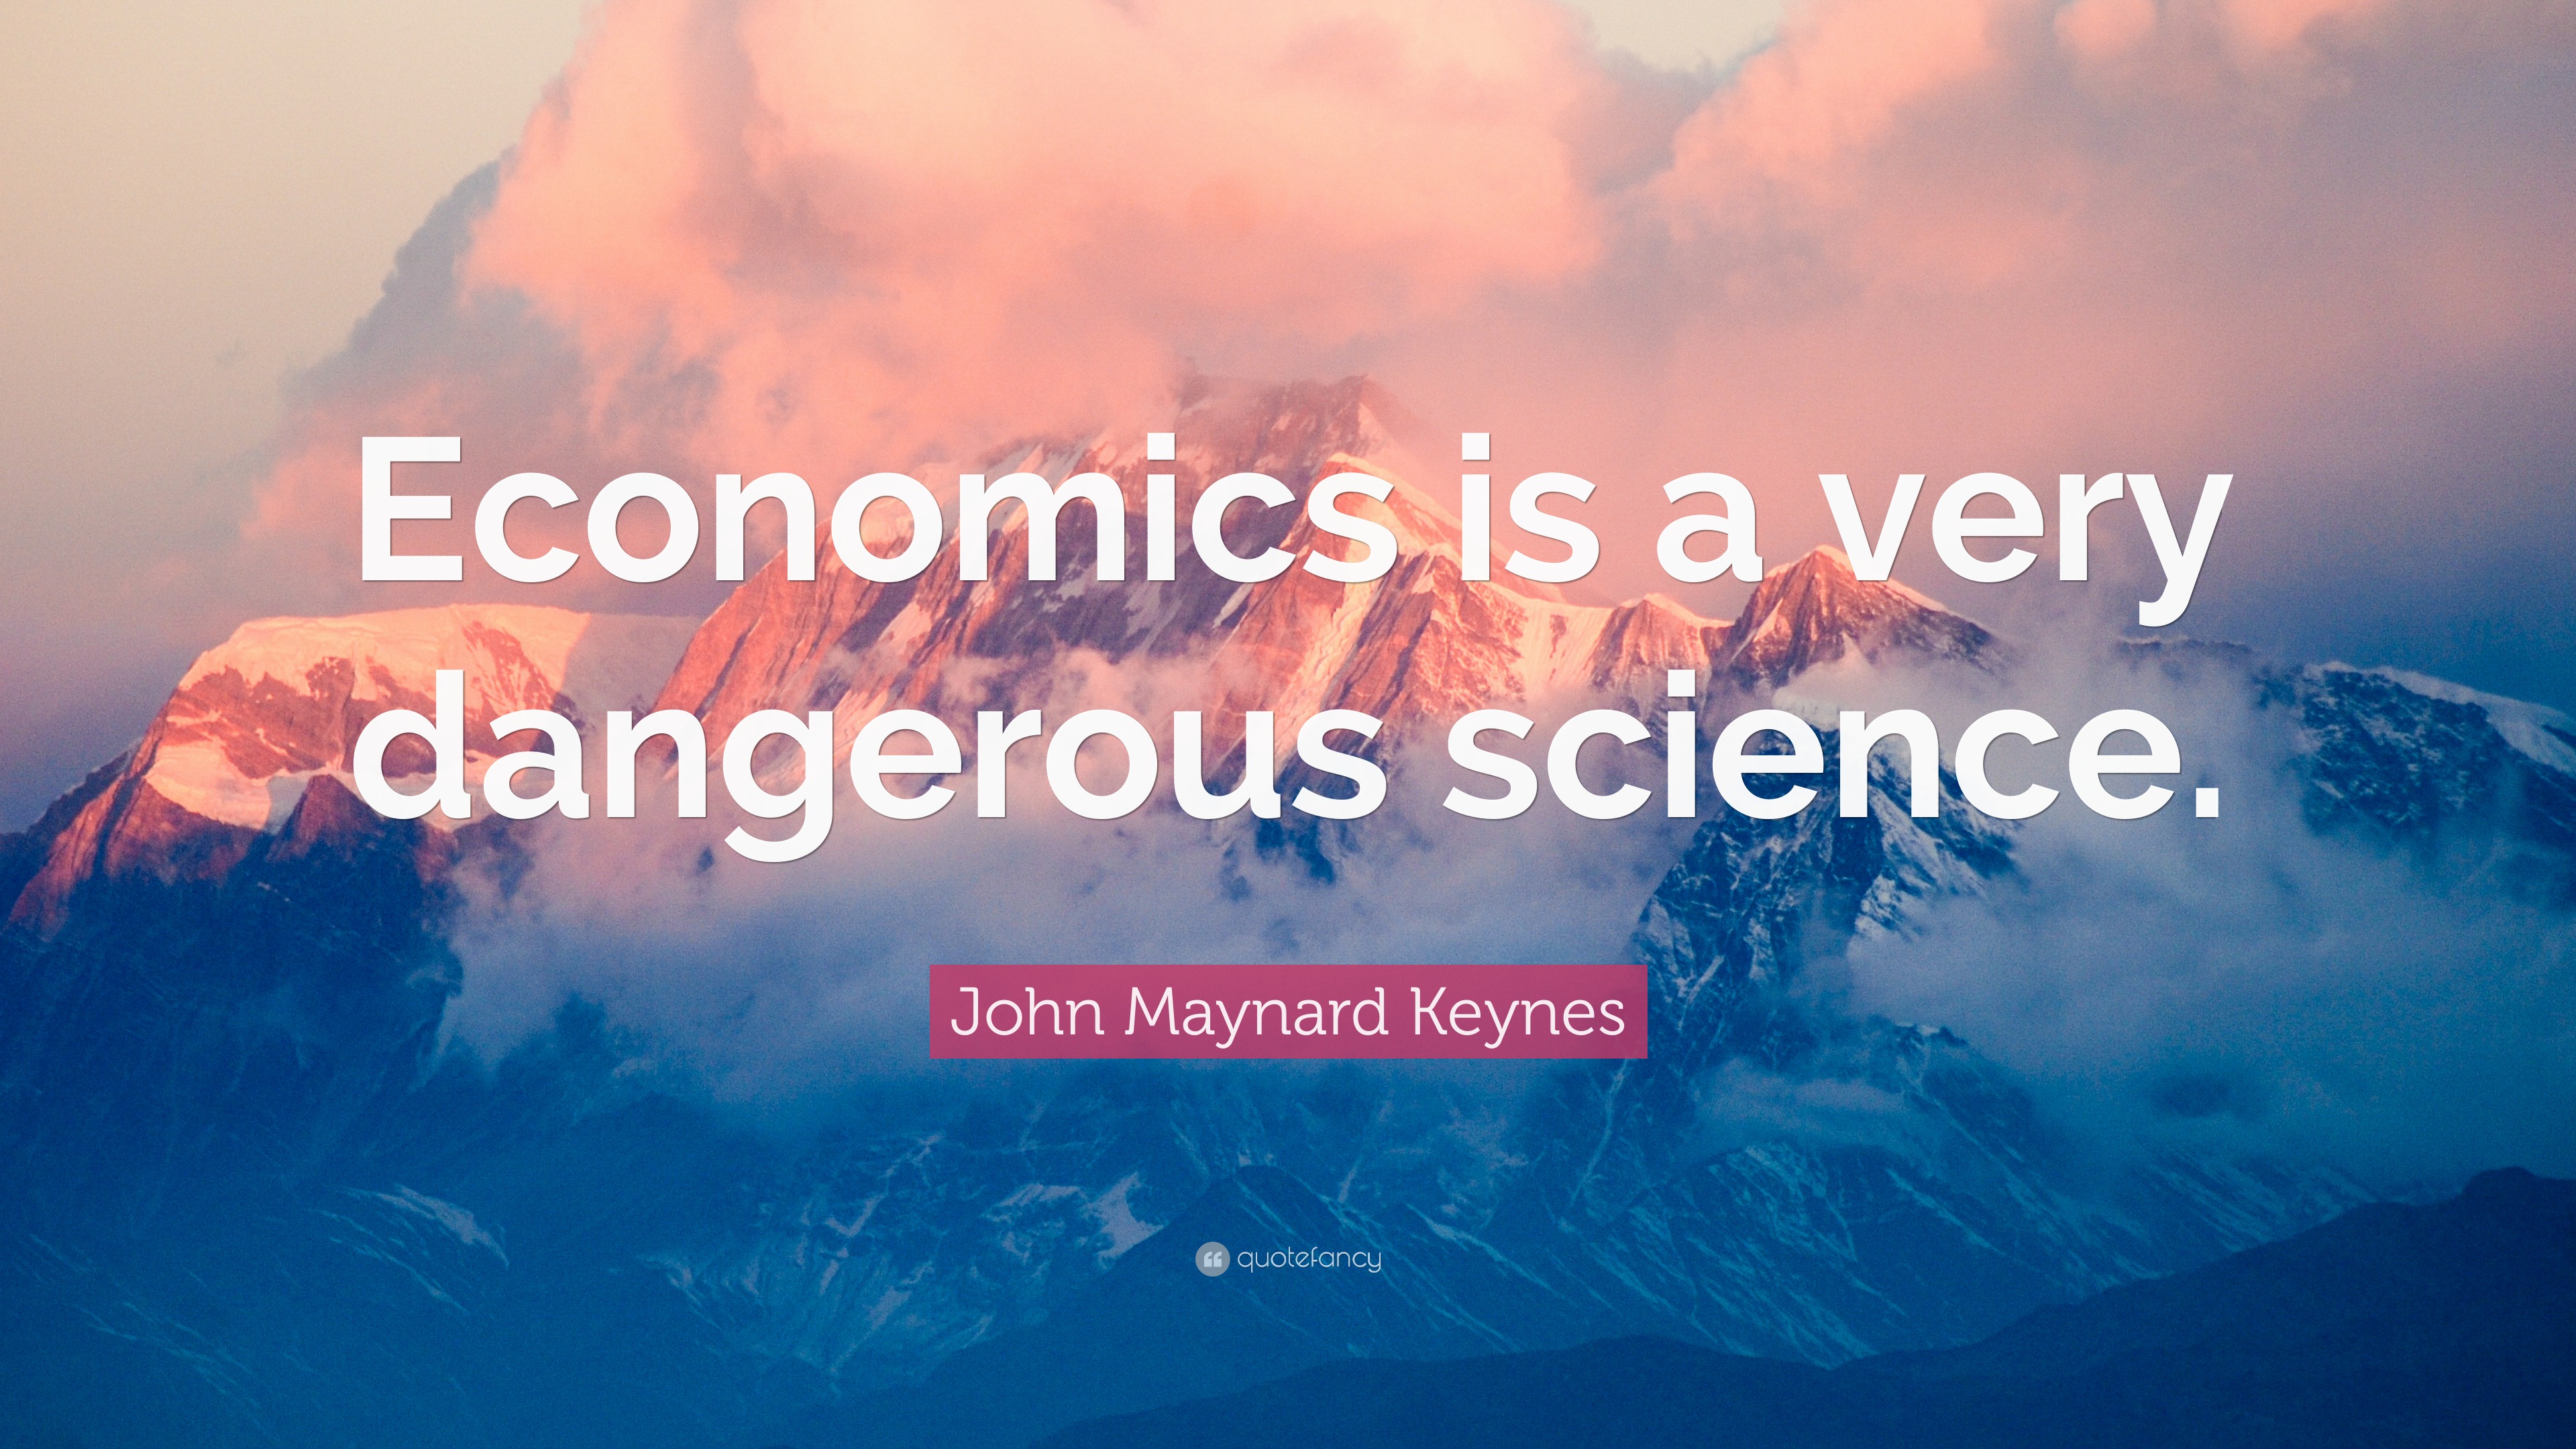 John Maynard Keynes Quote: “Economics is a very dangerous science.”